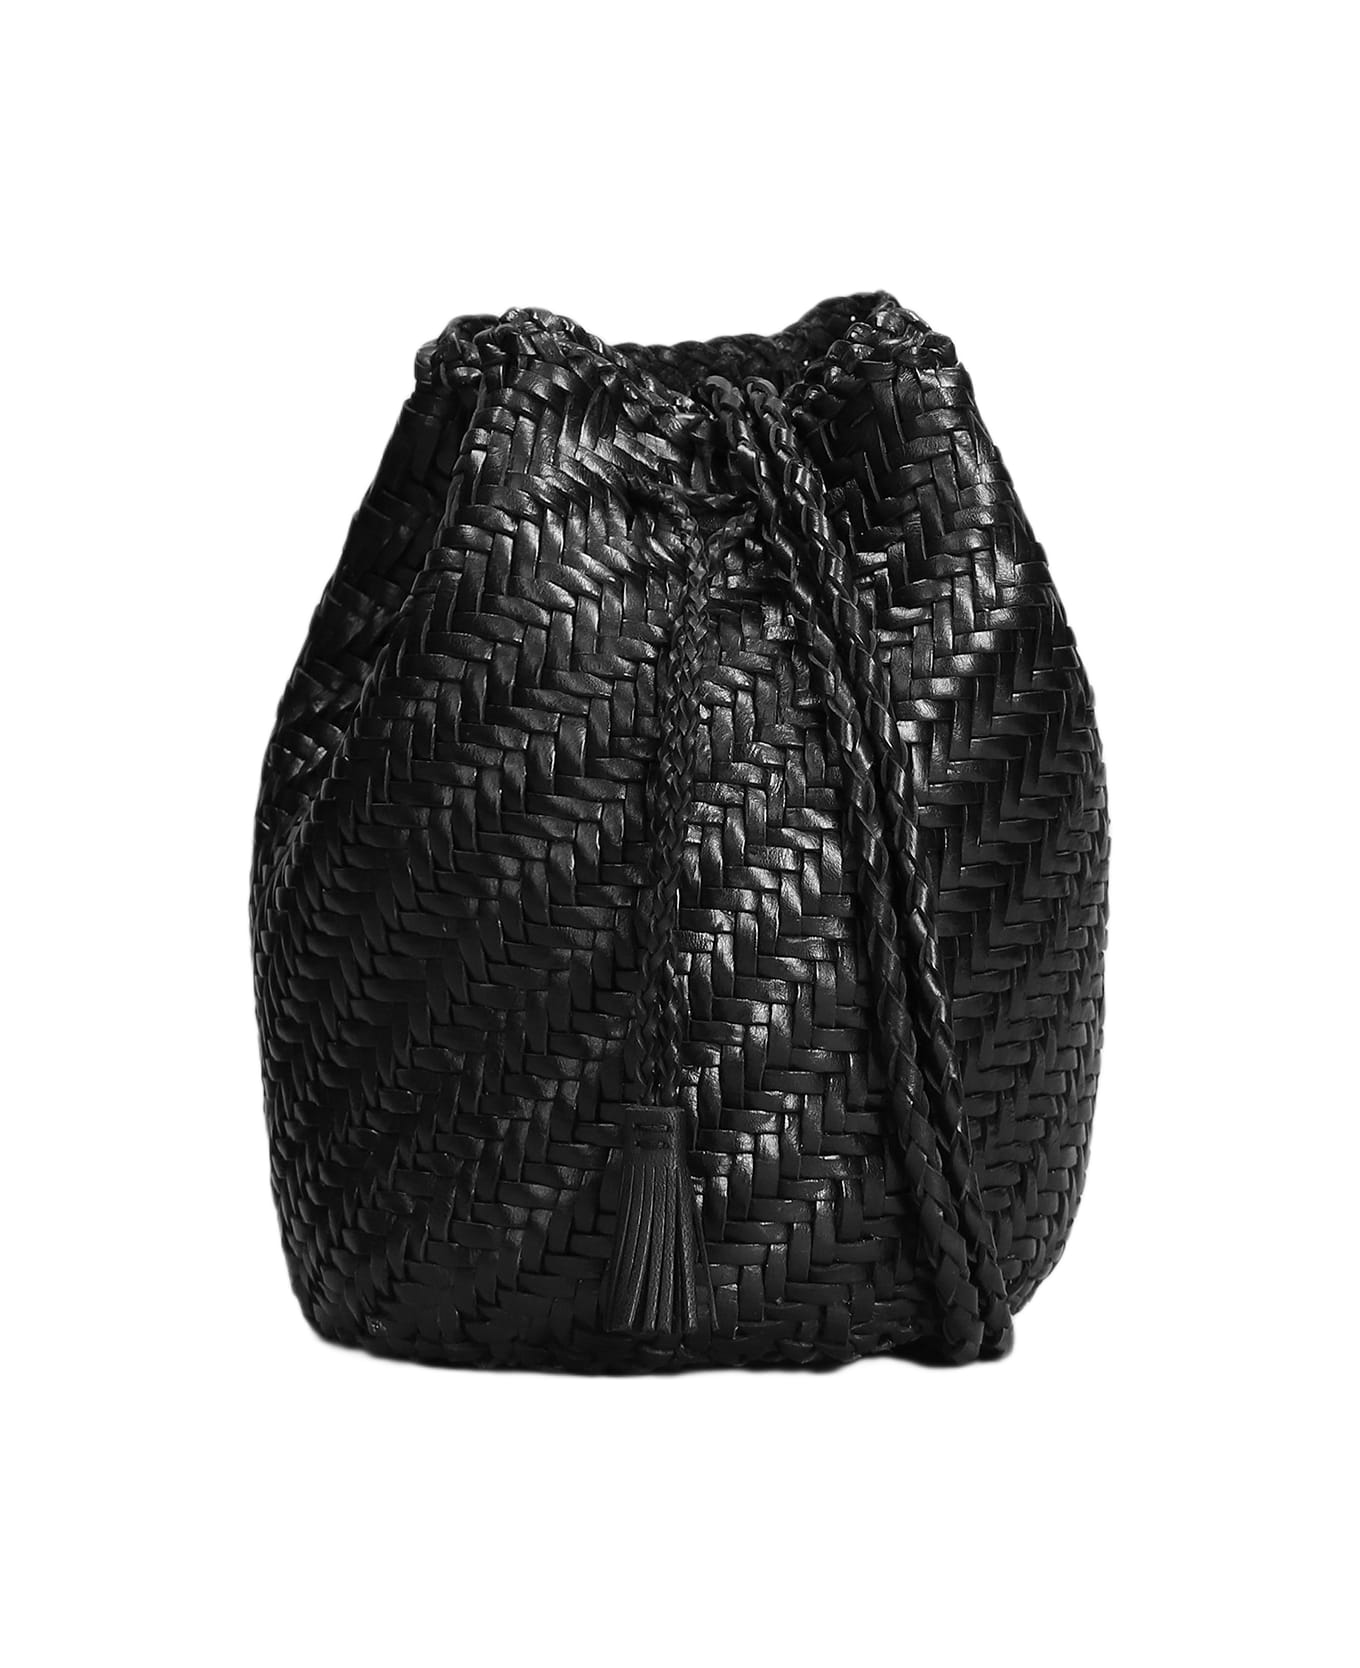 Dragon Diffusion Pompom Double Shoulder Bag In Black Leather - black